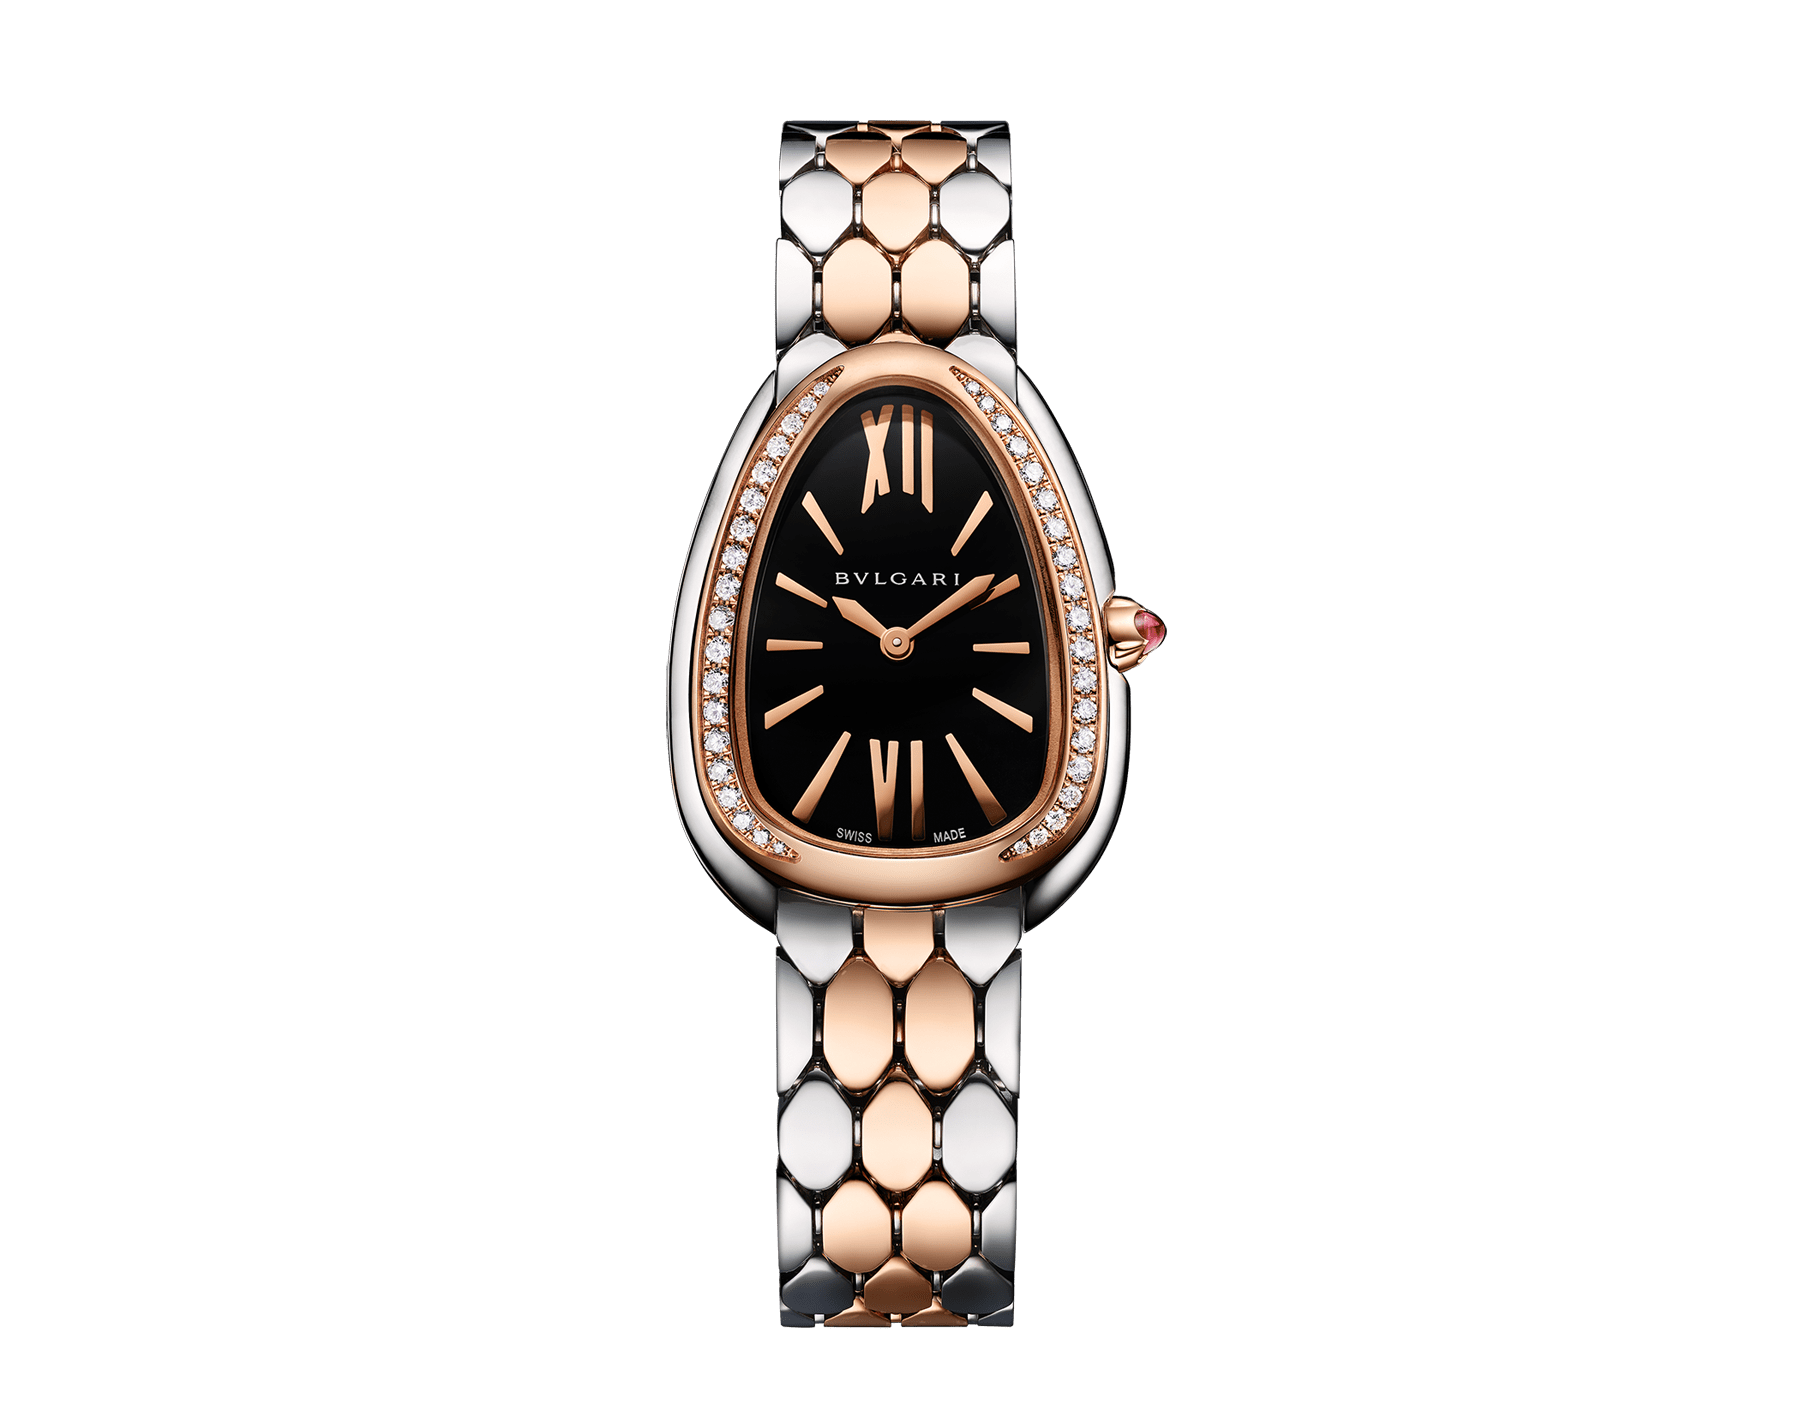 Serpenti Seduttori 腕錶，精鋼錶殼，18K 玫瑰金錶圈鑲飾 38 顆圓形明亮型切割鑽石，黑色漆面錶盤，精鋼和 18K 玫瑰金錶帶，折疊式錶扣。防水深度 30 公尺。 103450 image 1